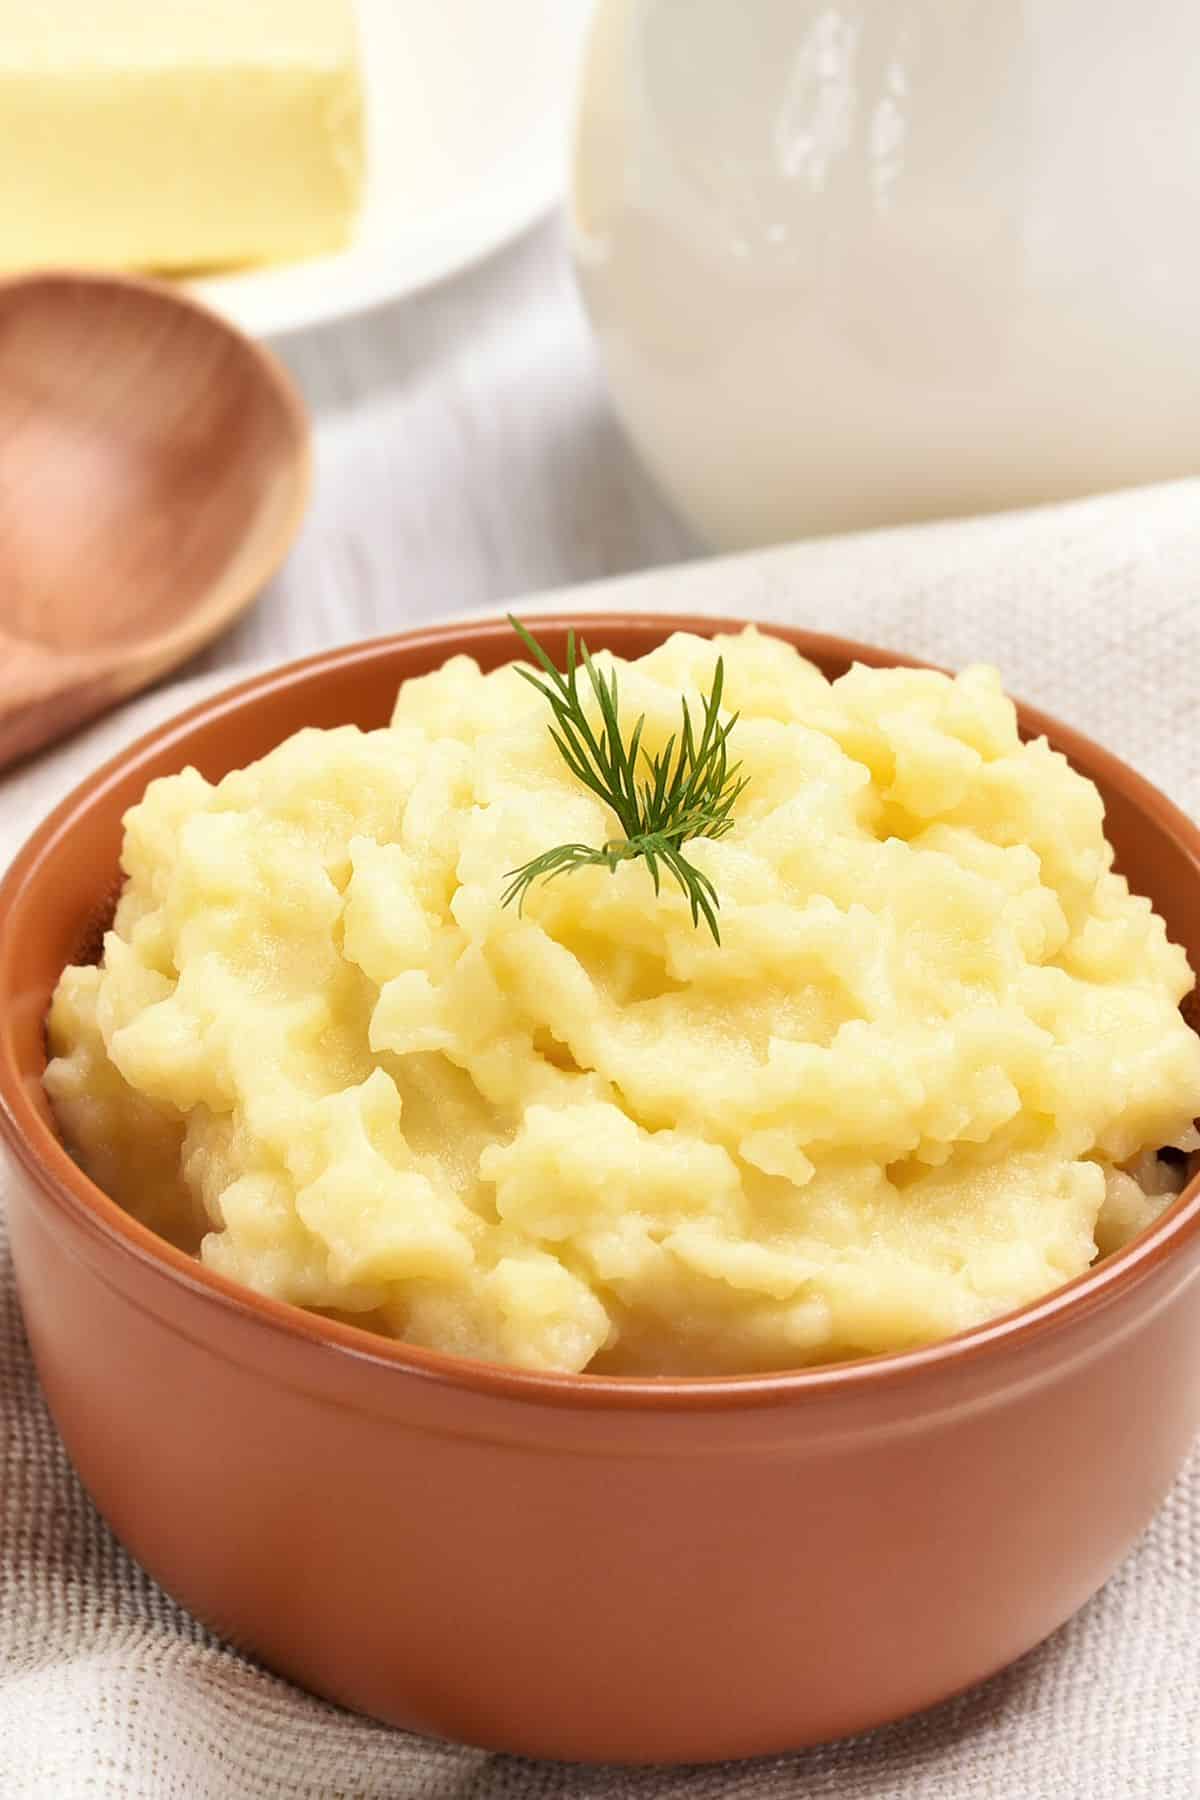 A close up look at a bowl of mashed potatoes.